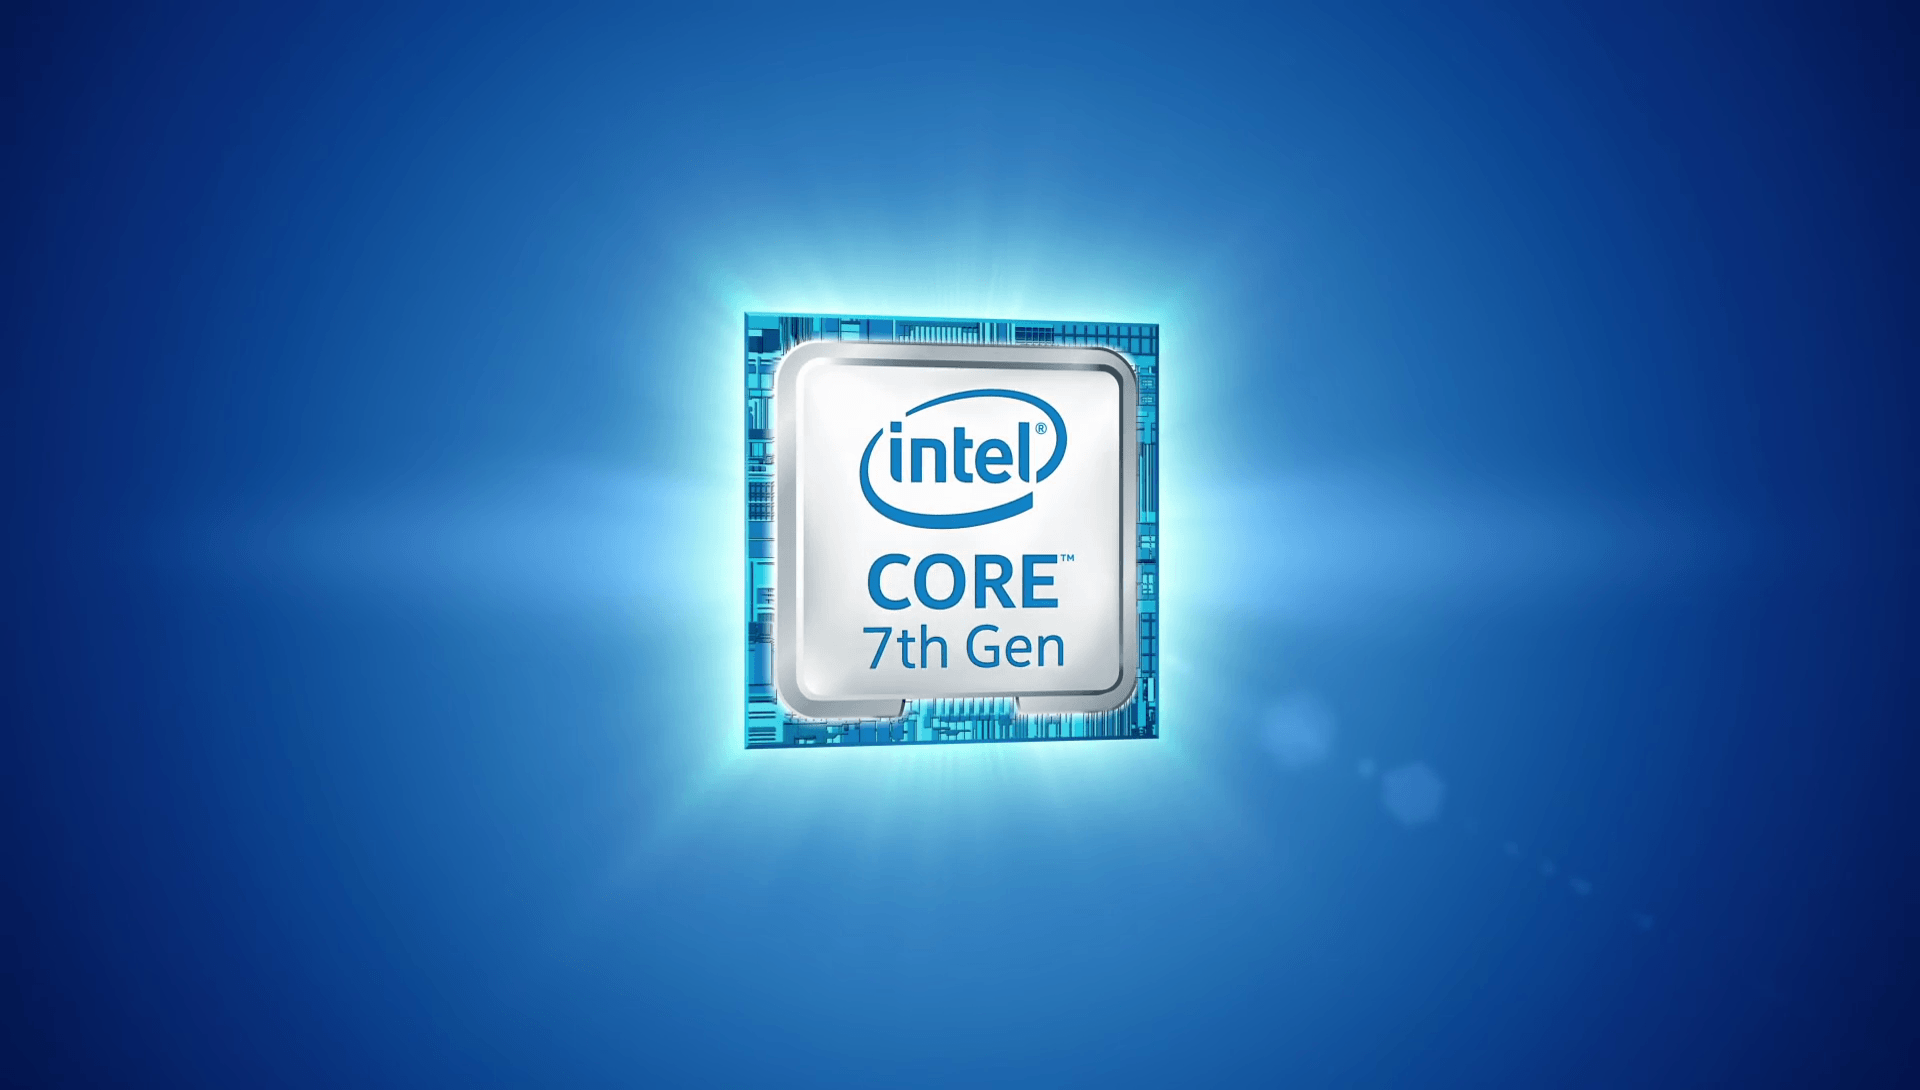 Intel I5 Wallpaper, PC Intel I5 Wallpaper Most Beautiful Image